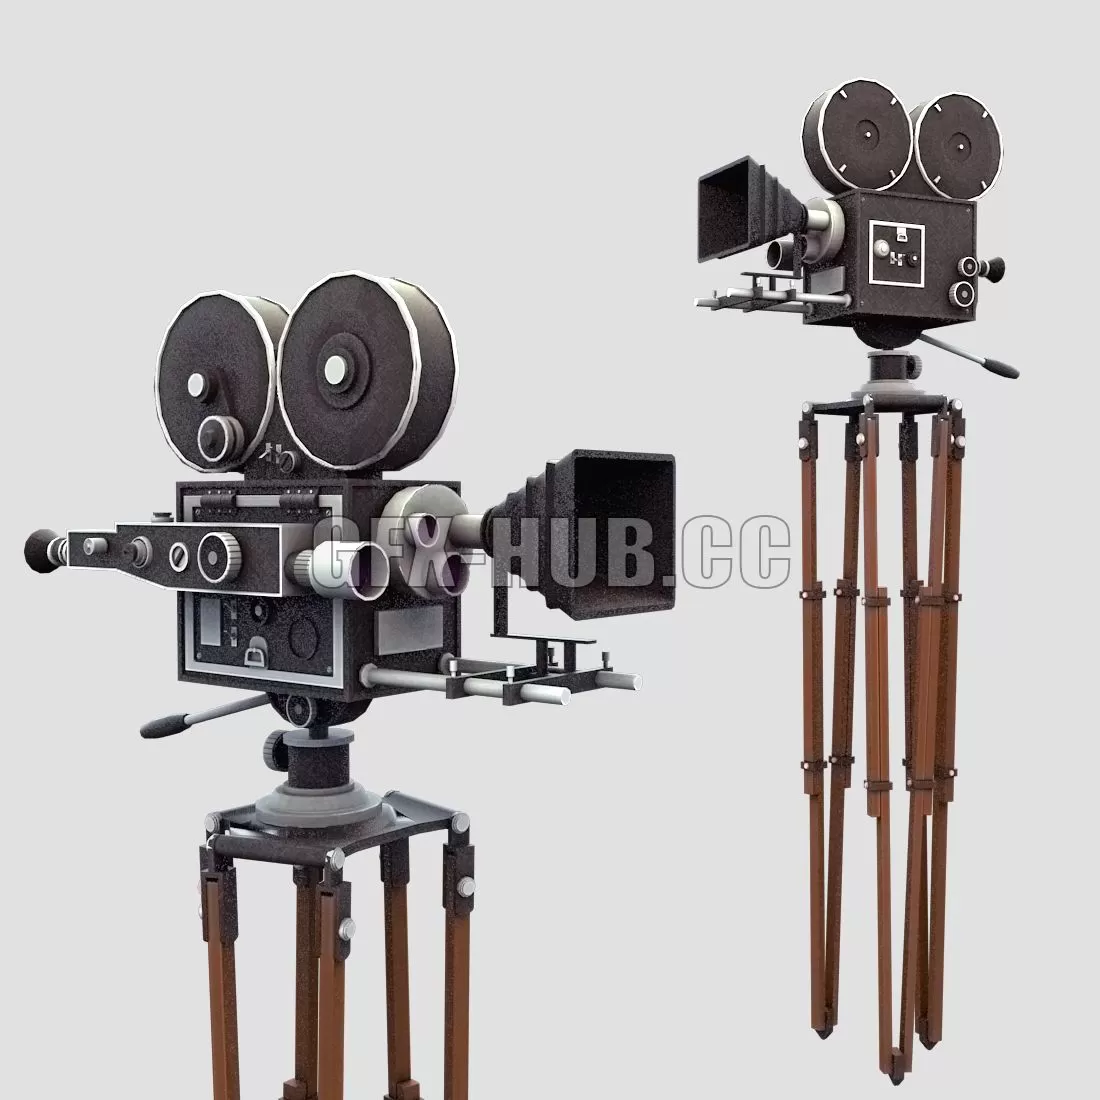 FURNITURE 3D MODELS – Vintage movie camera with tripod